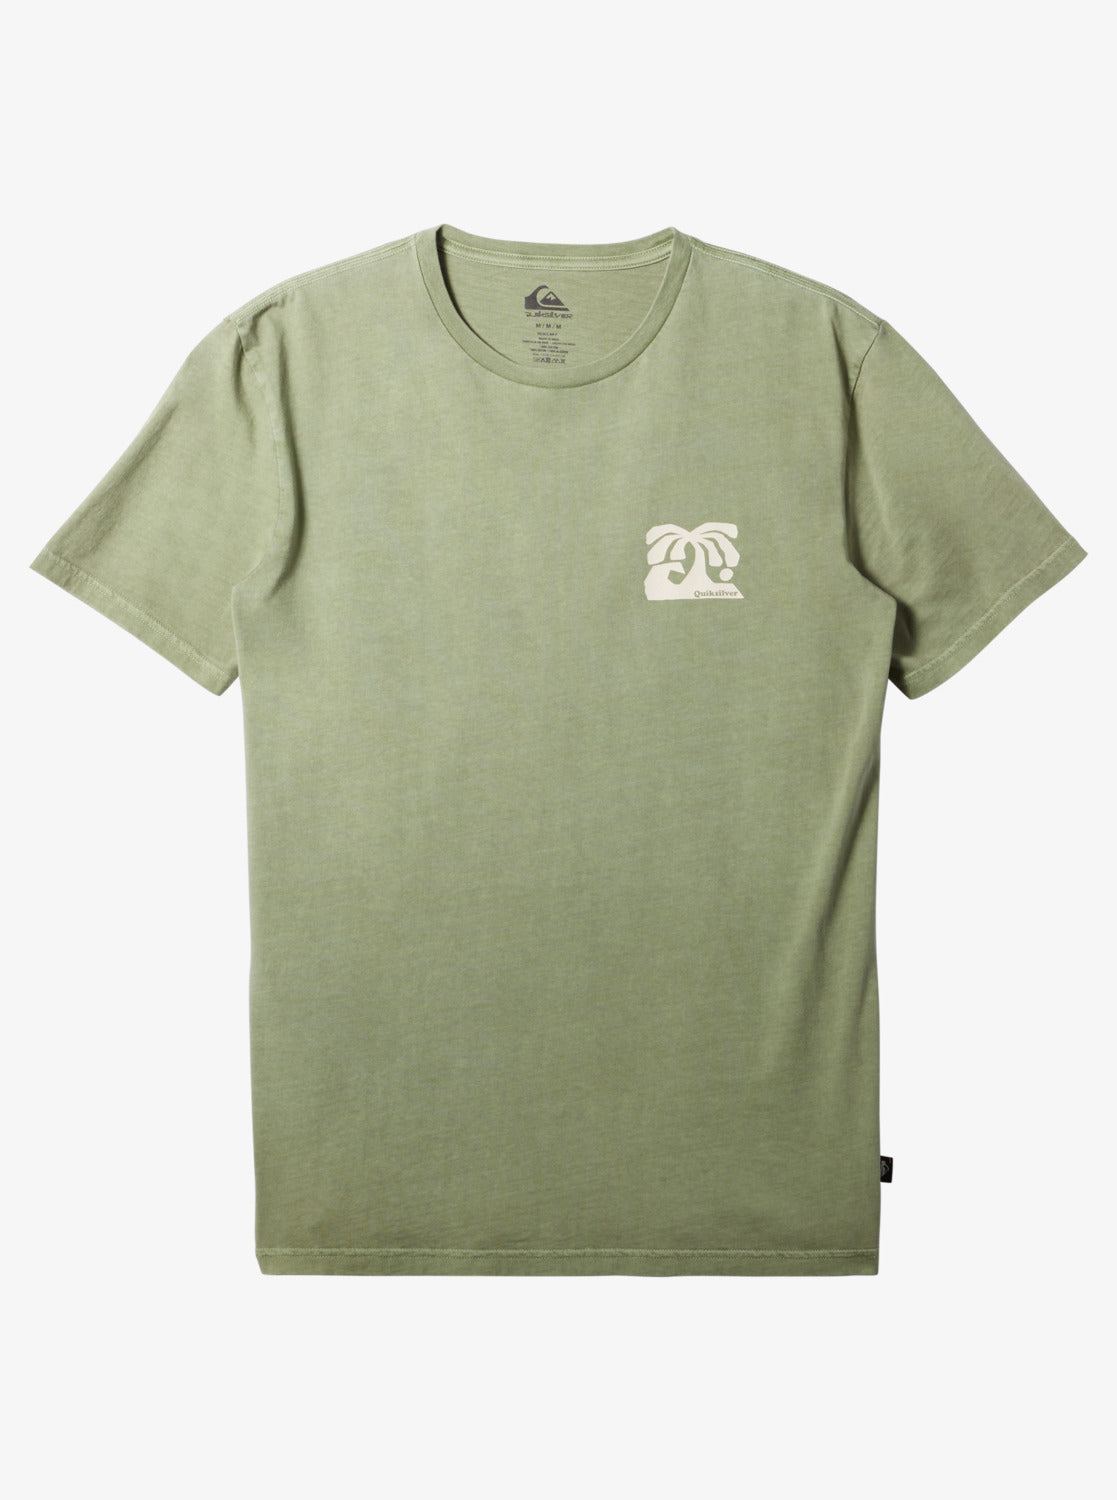 Quiksilver Mens Island Time T-Shirt, Sea Spray (Green), Size M